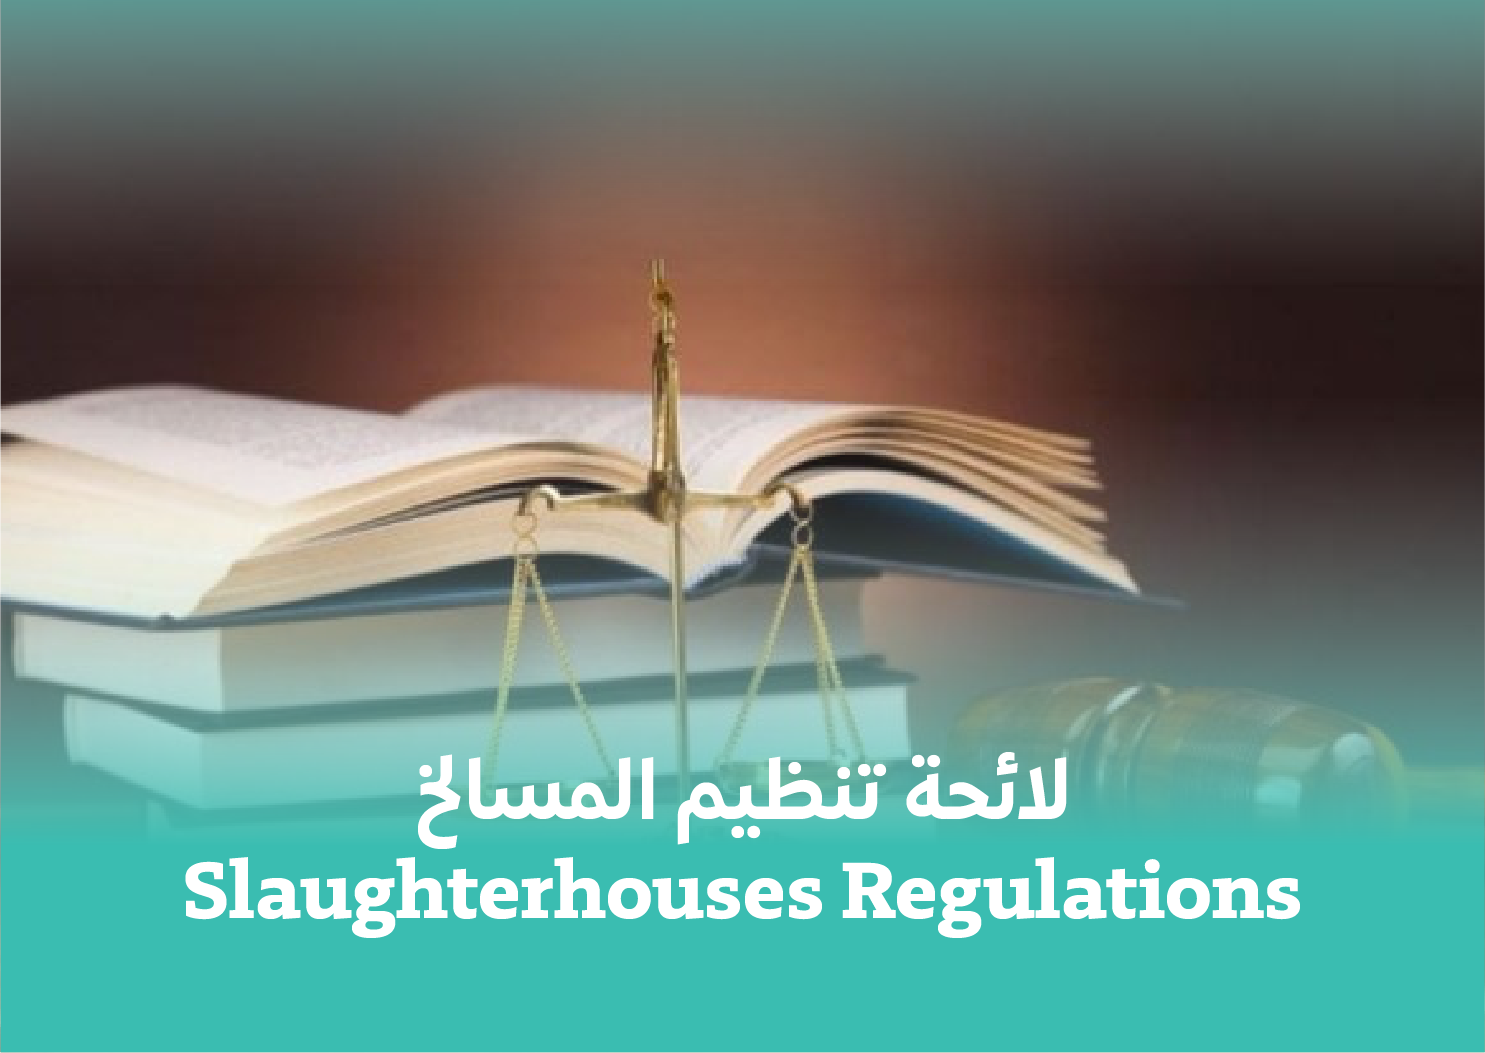 Slaughterhouses Regulations